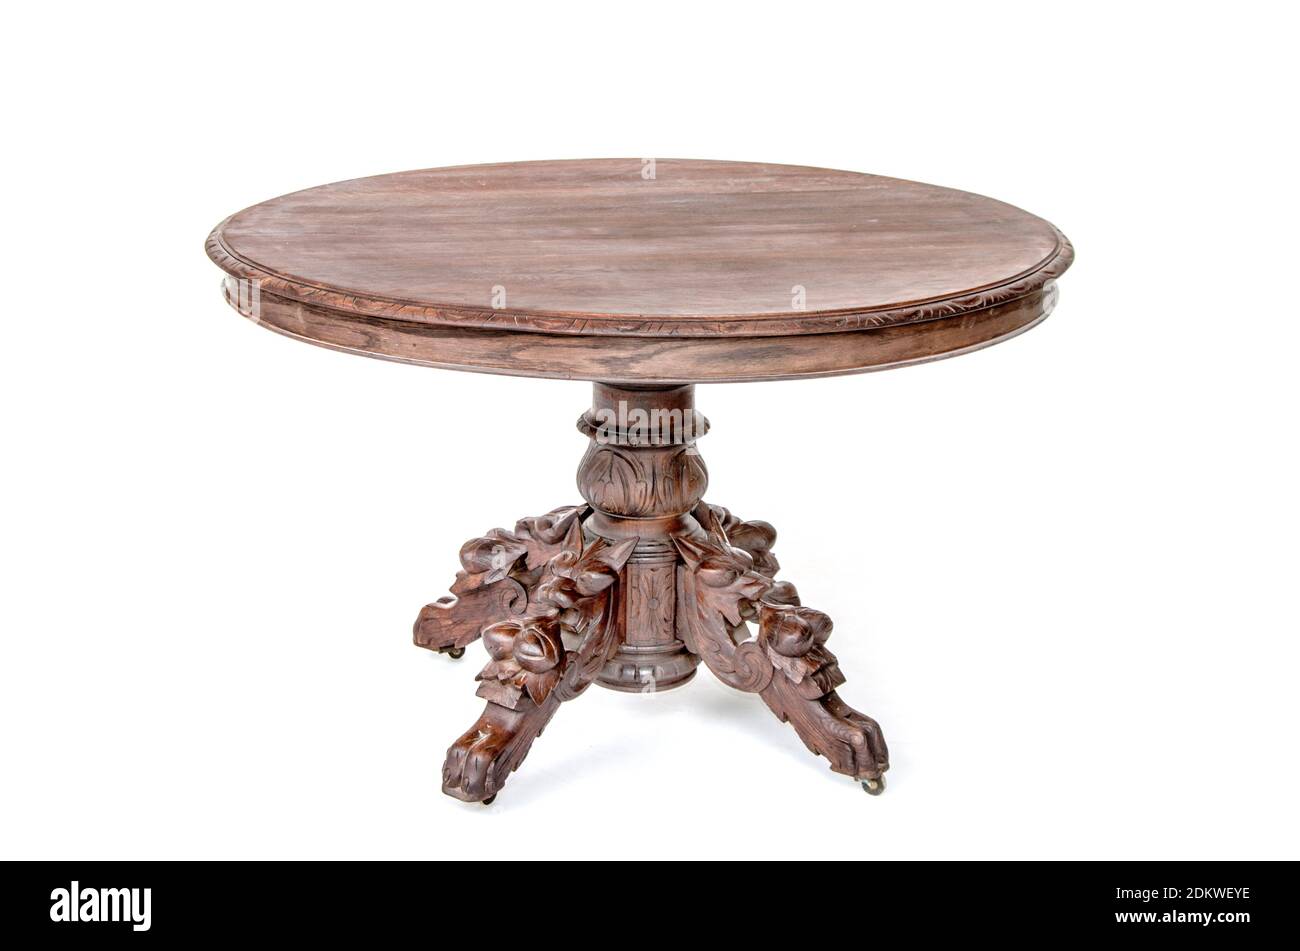 Antique round kitchen table on the white background Stock Photo